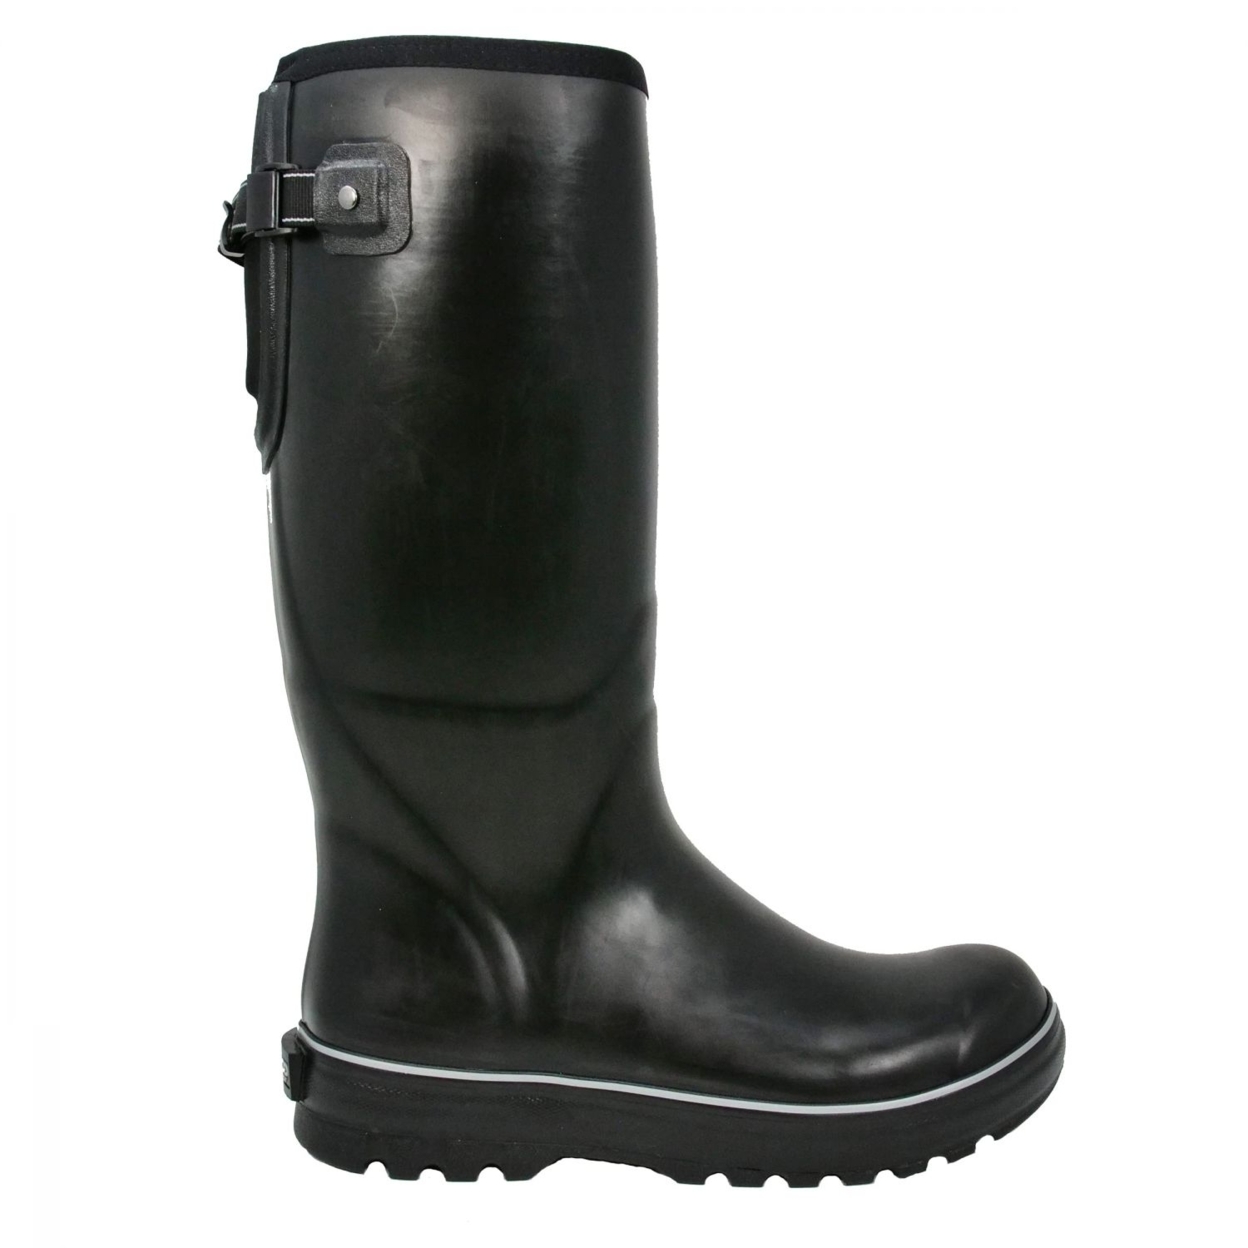 Dryshod Men's Mudslinger Gusset Premium Rubber Farm Boots Black/Grey - MDG-MH-BK ONE SIZE BLACK/GREY - BLACK/GREY, 8